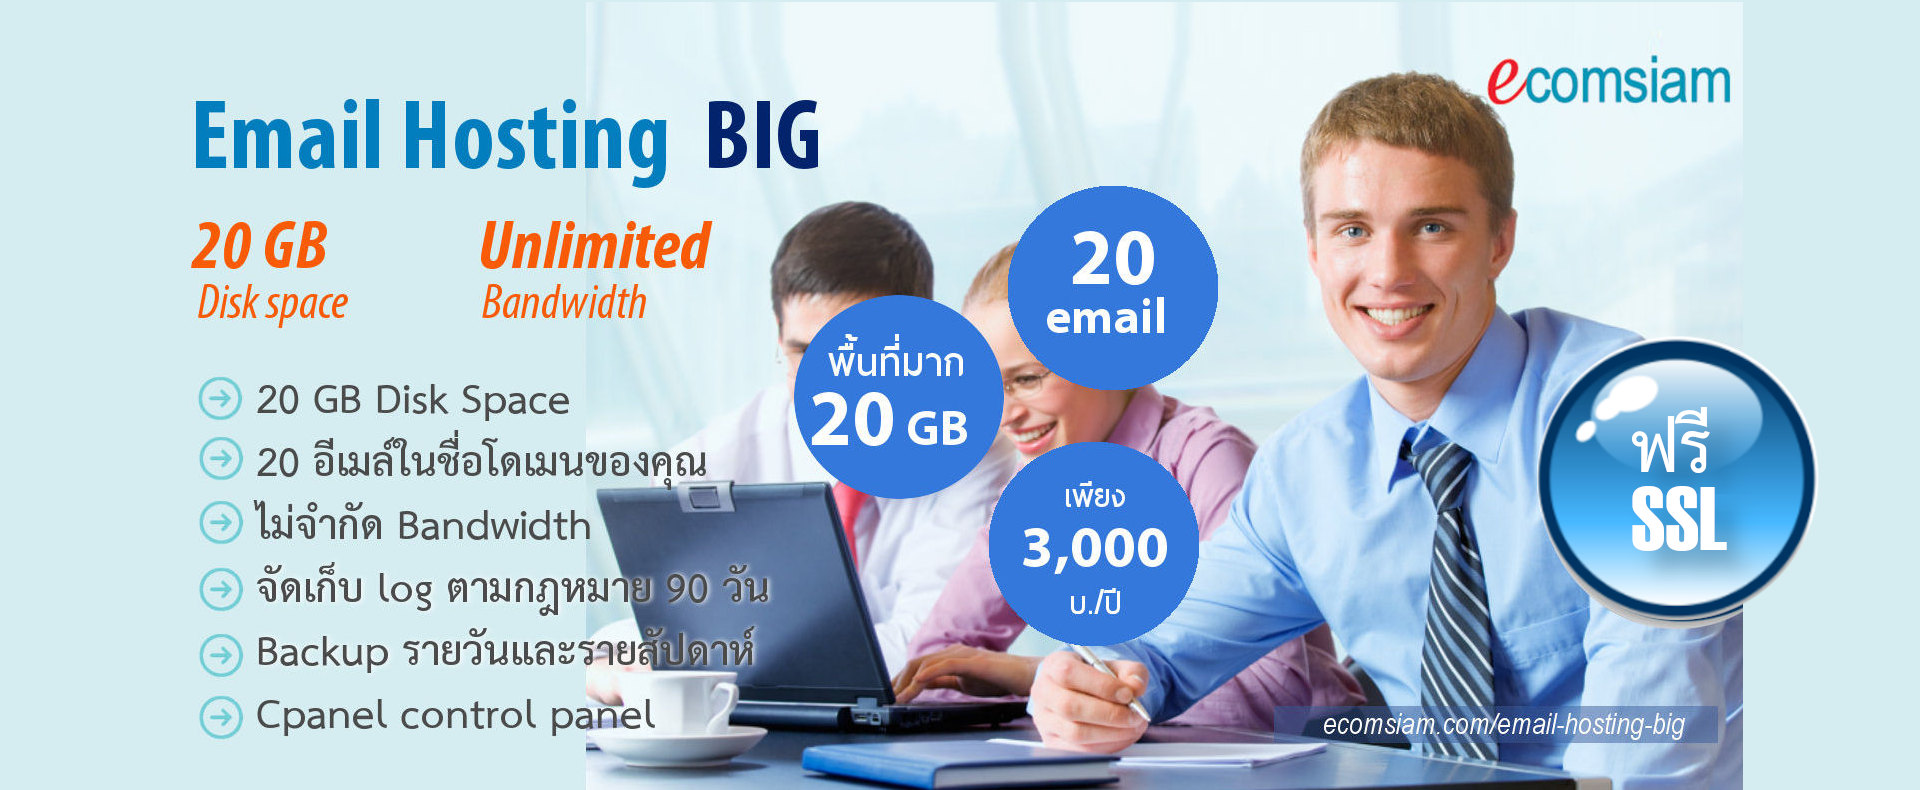 Email hosting thai ไทย - big mail พื้นที่มากถึง 20 GB/20 email เพียง 3000 บาทต่อปี พร้อมใบรับรอง SSL